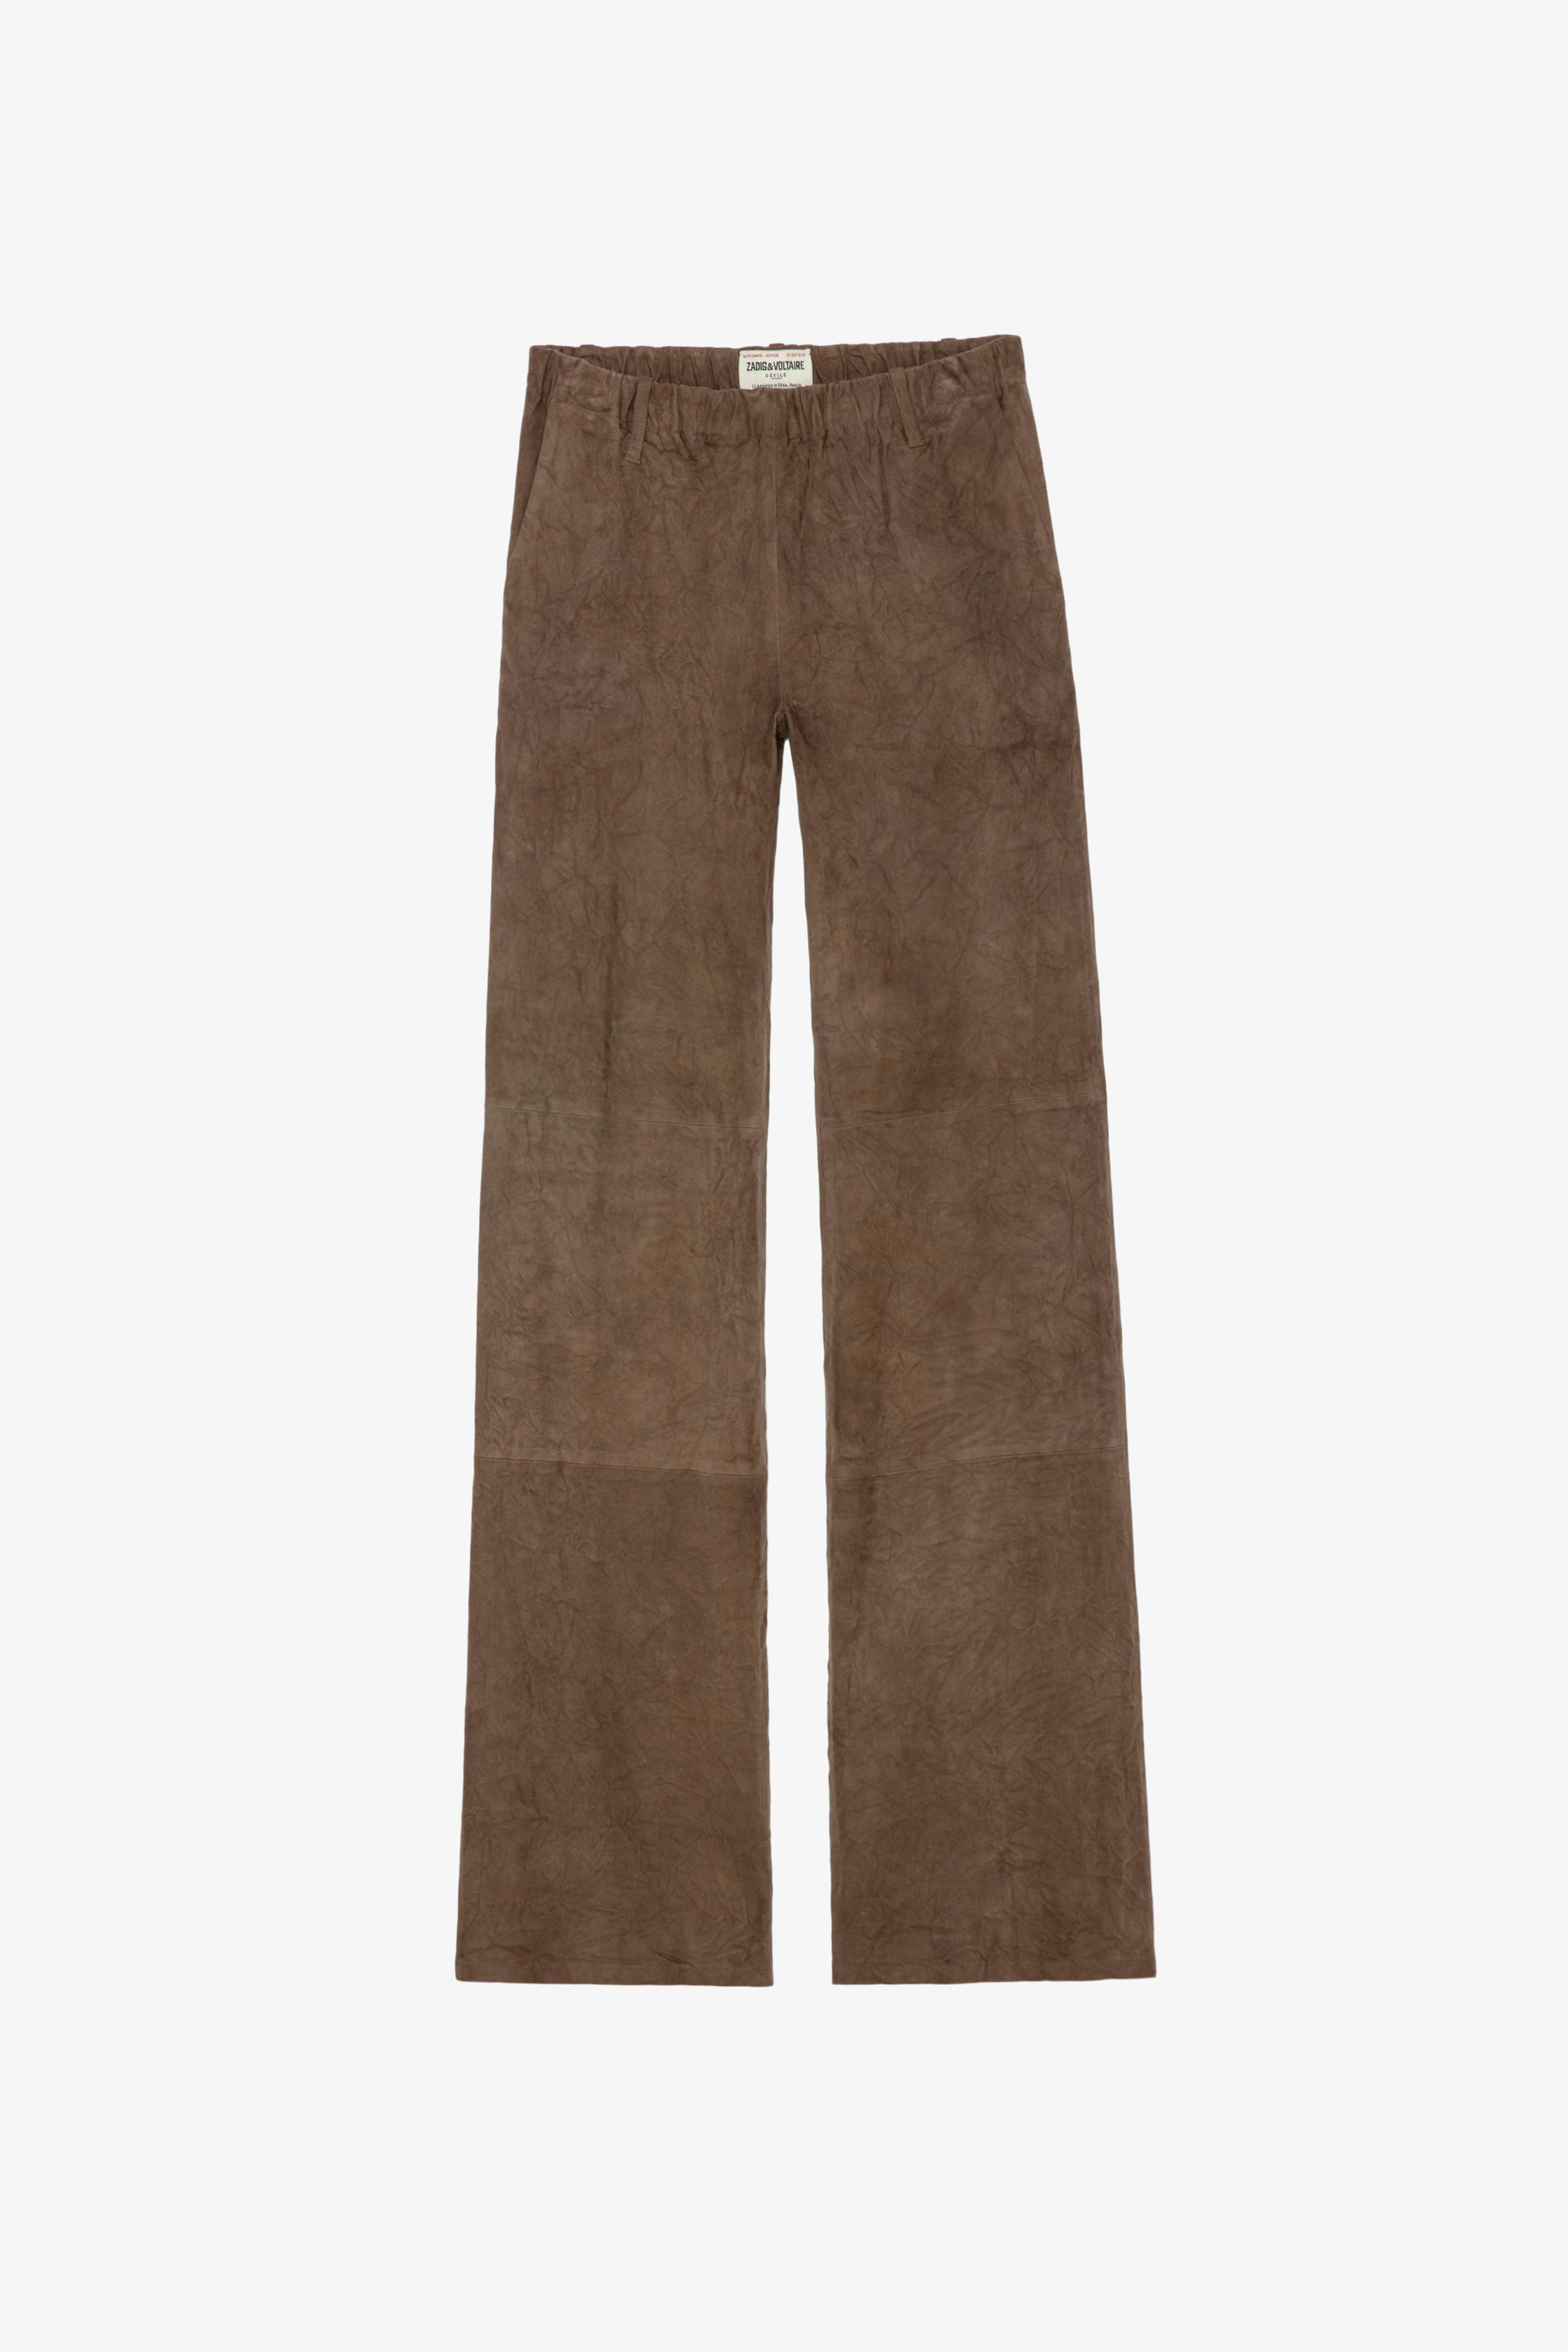 Pantalón de gamuza con efecto arrugado Parfait Pantalón de gamuza con efecto arrugado de color bronce para mujer